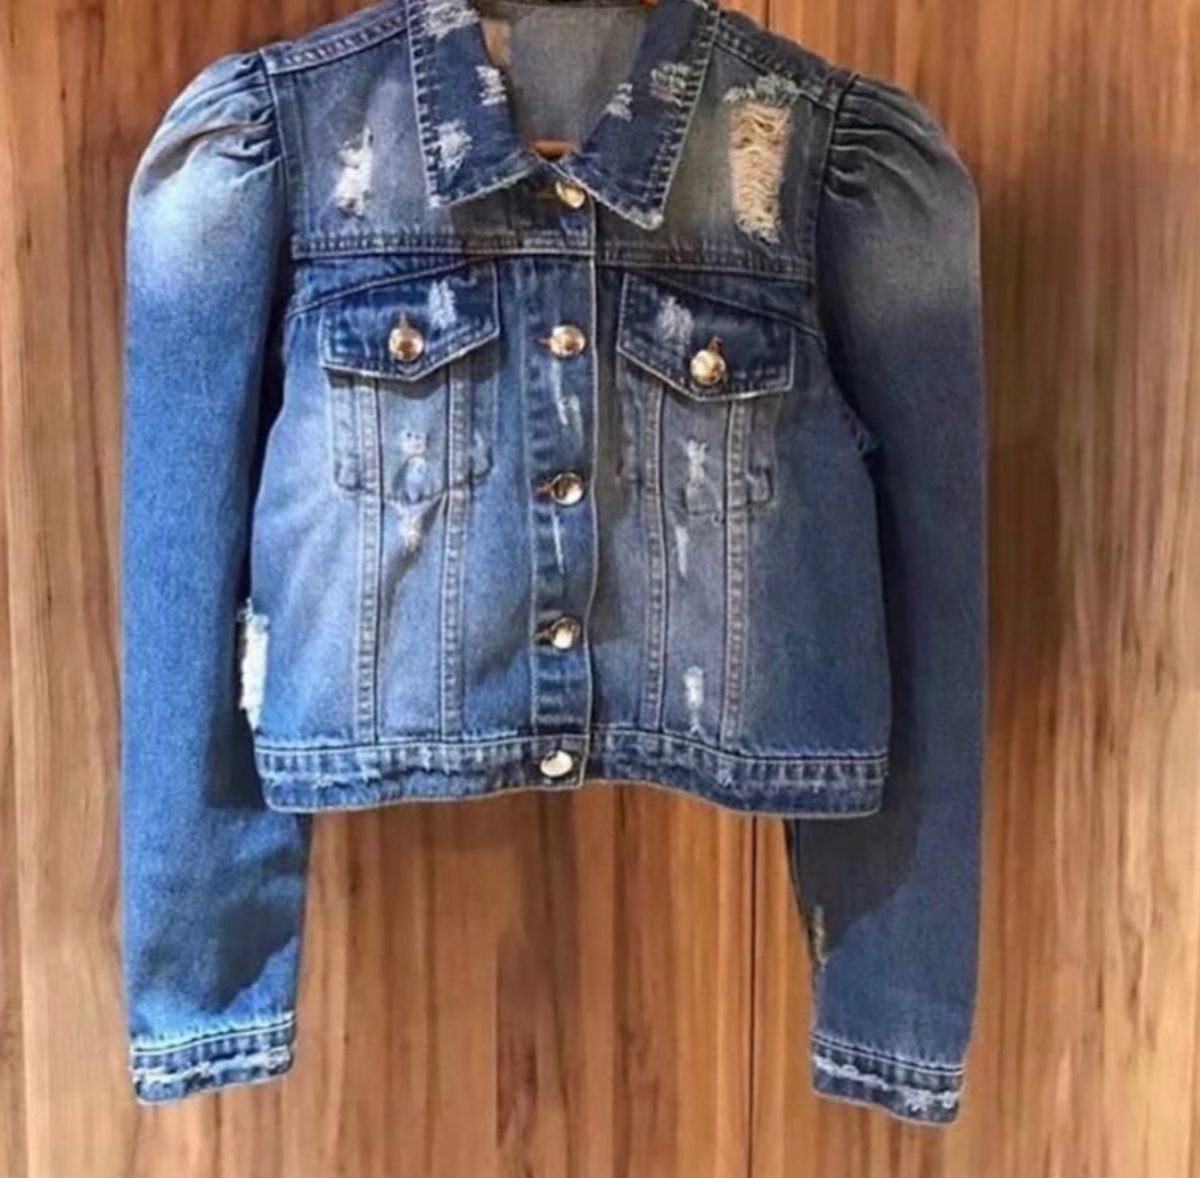 jaqueta jeans manga bufante